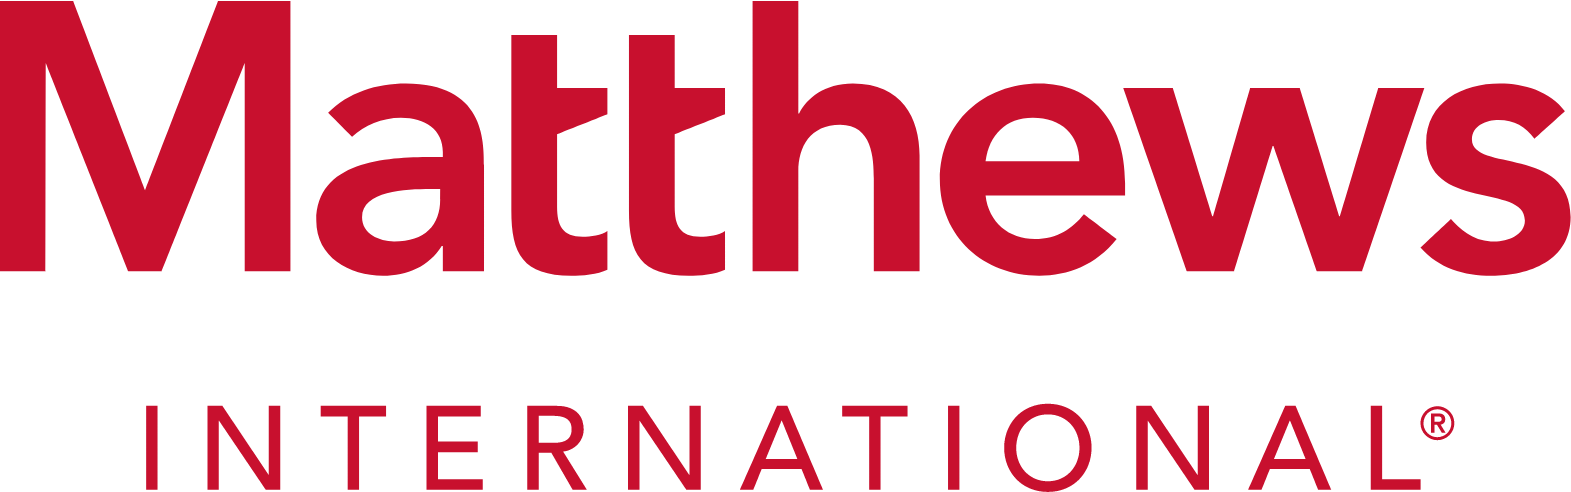 Matthews International Corporation
 logo large (transparent PNG)